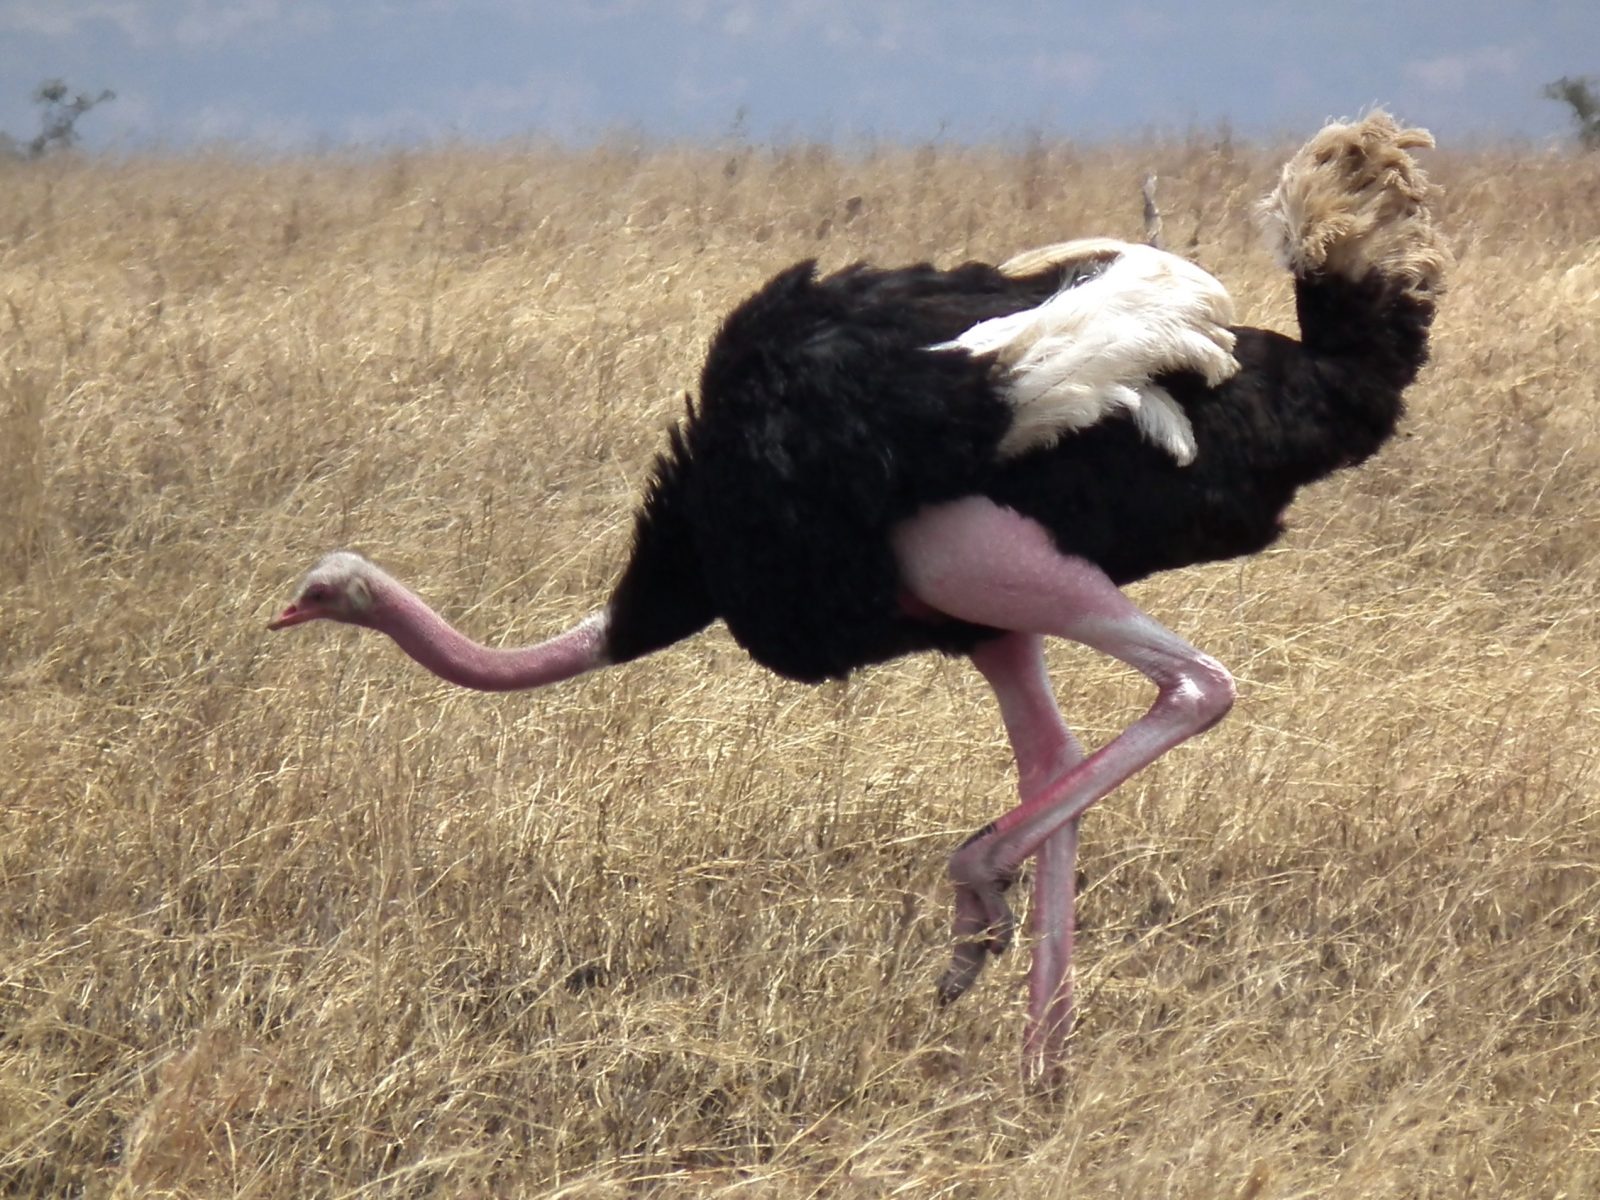 Ostrich. Photo credit: Nevit Dilmen. https://commons.wikimedia.org/wiki/File:Ostrich_Struthio_camelus_Tanzania_3740_Nevit.jpg